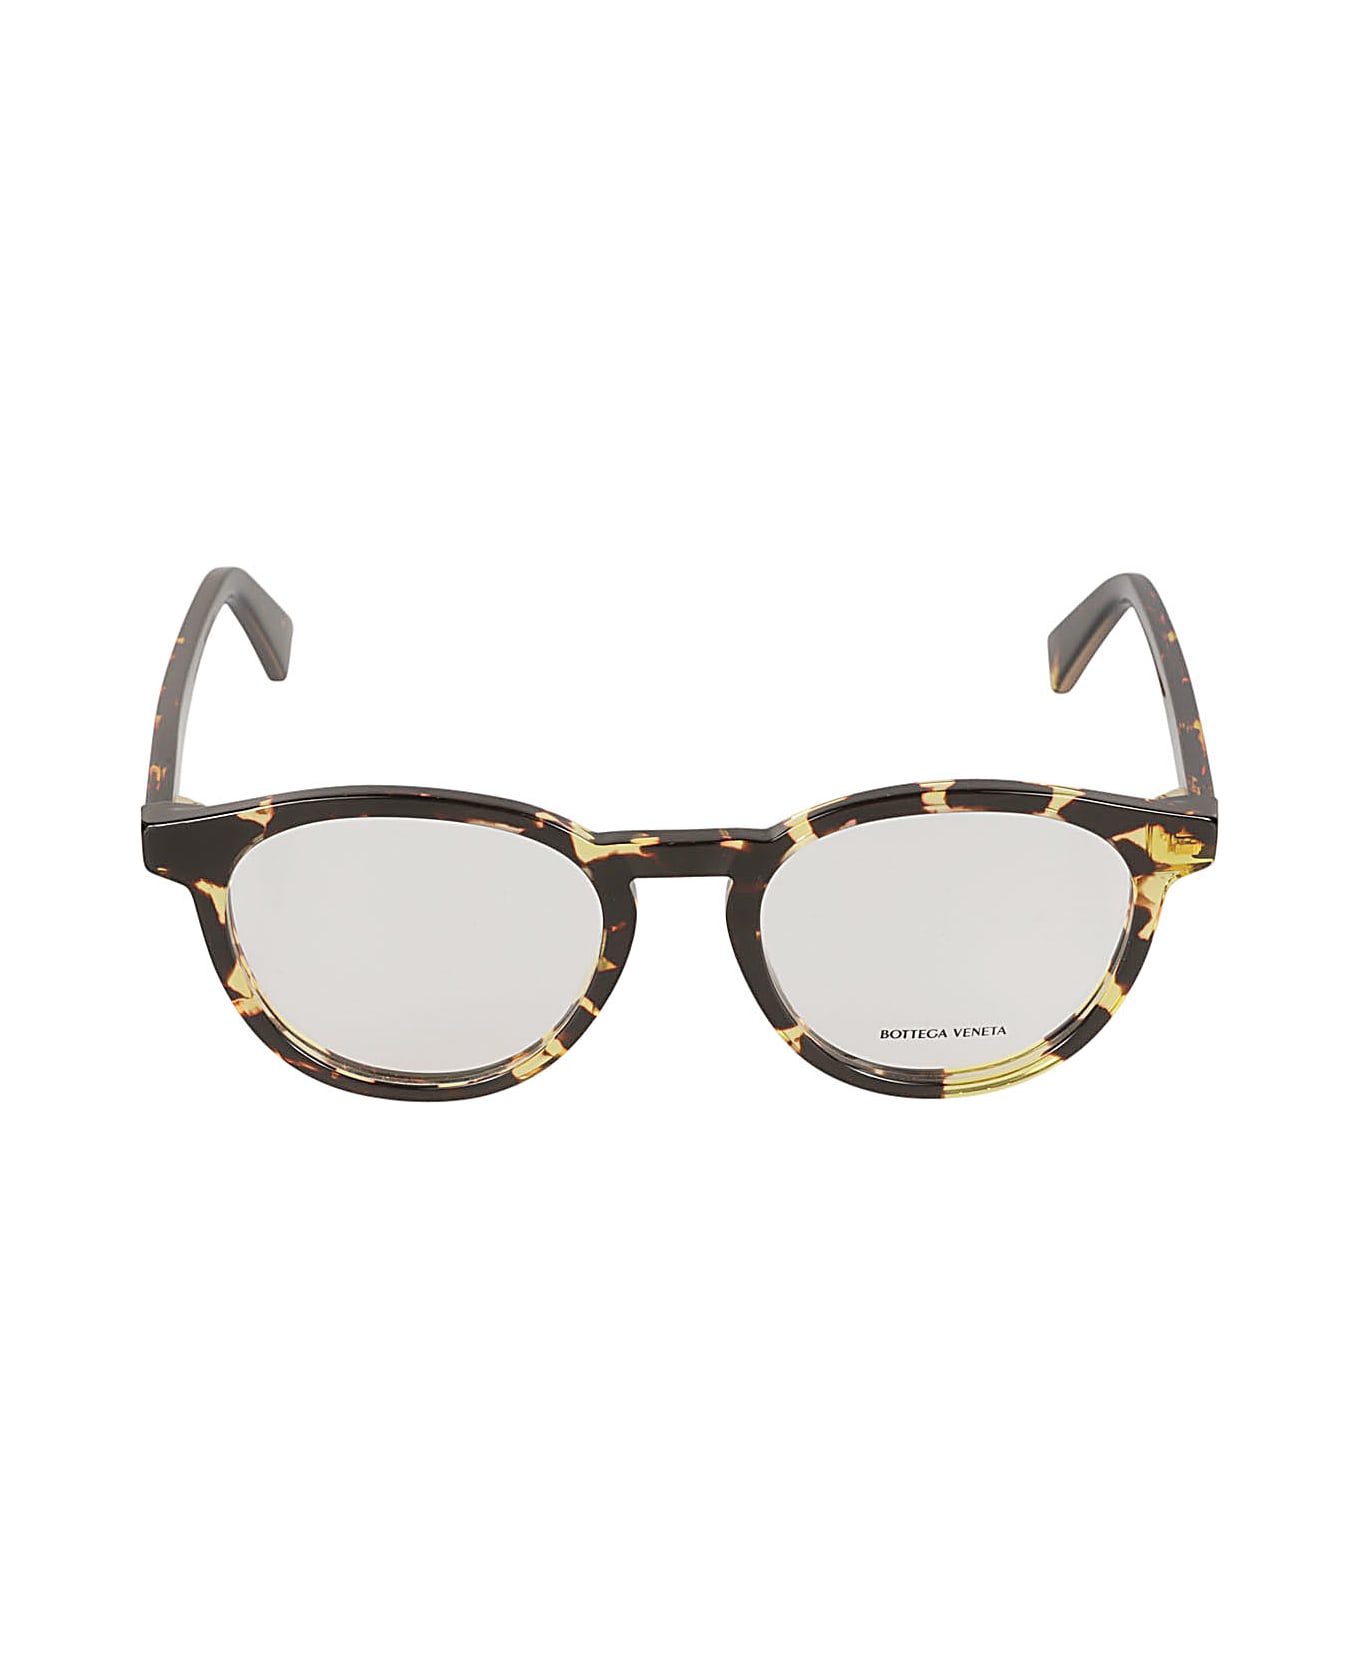 Bottega Veneta Eyewear Flame Effect Round Frame Glasses - Havana/Transparent アイウェア